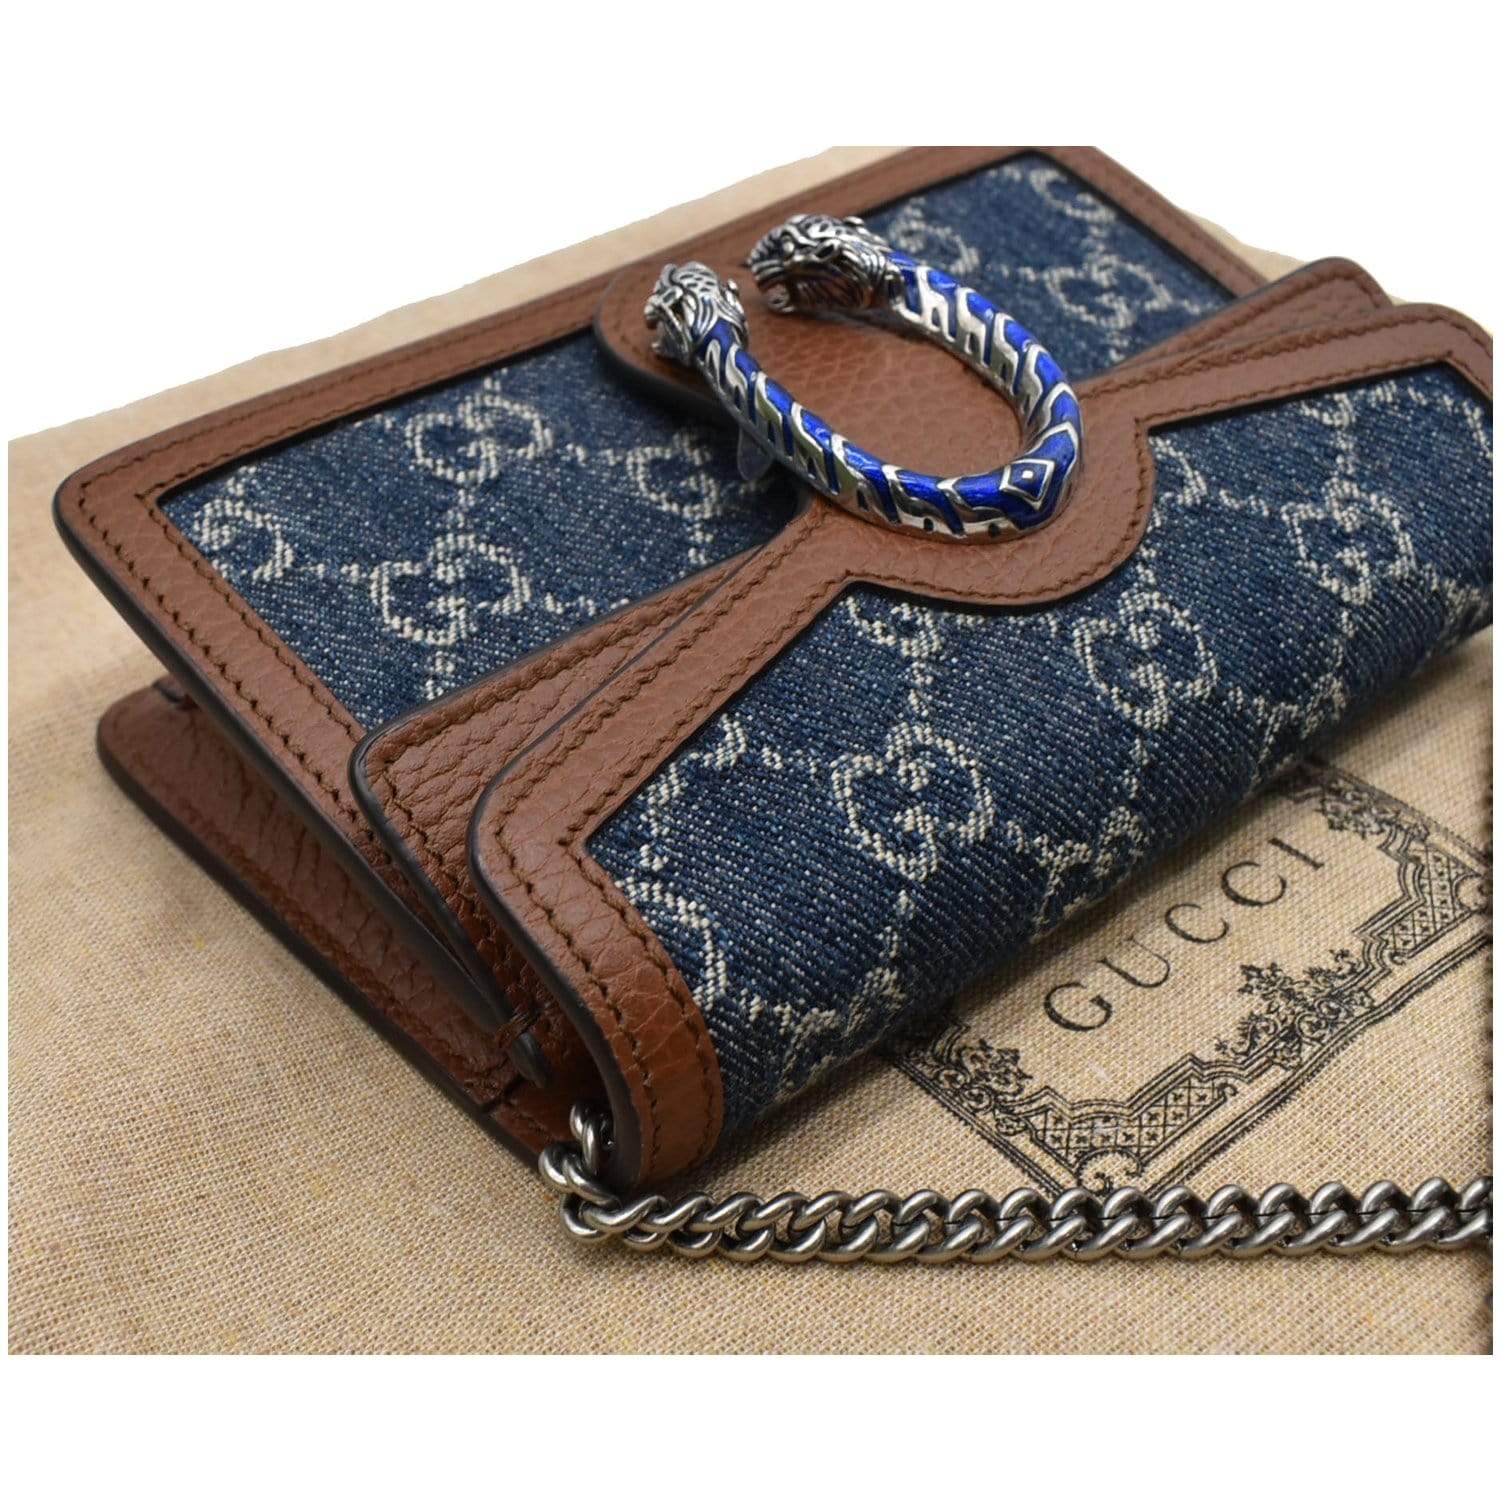 Gucci Super Mini Dionysus Chain Bag - Blue Mini Bags, Handbags